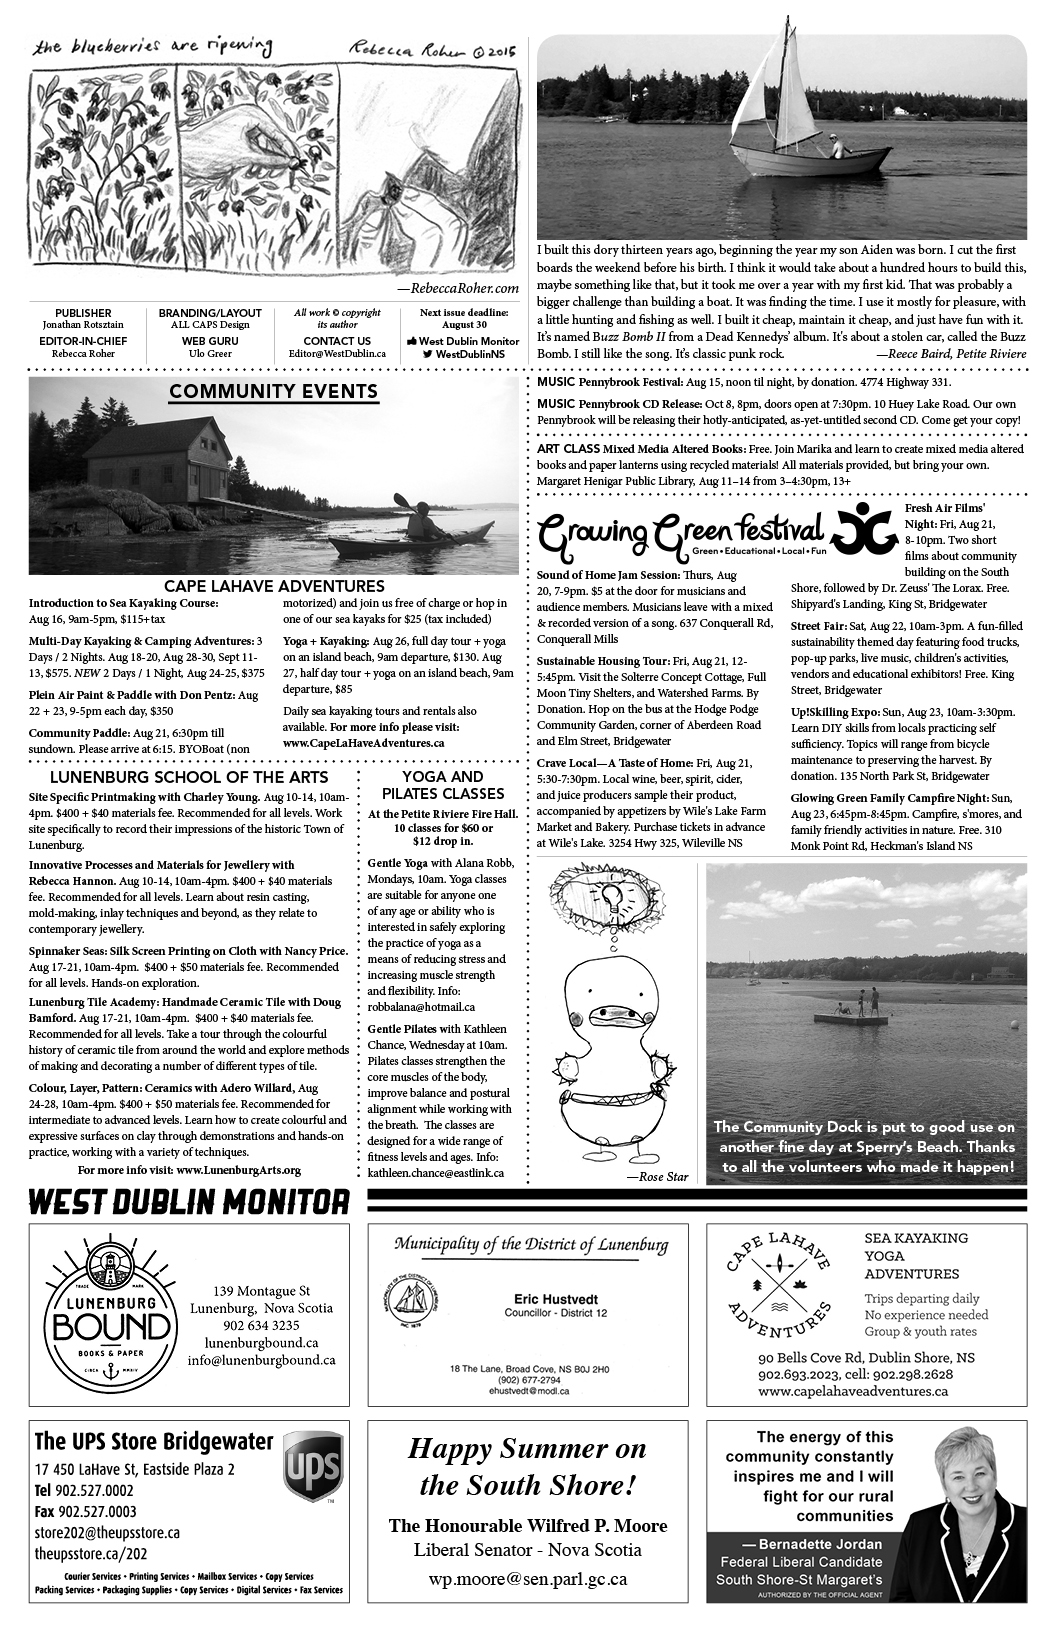 West Dublin Monitor Nova Scotia